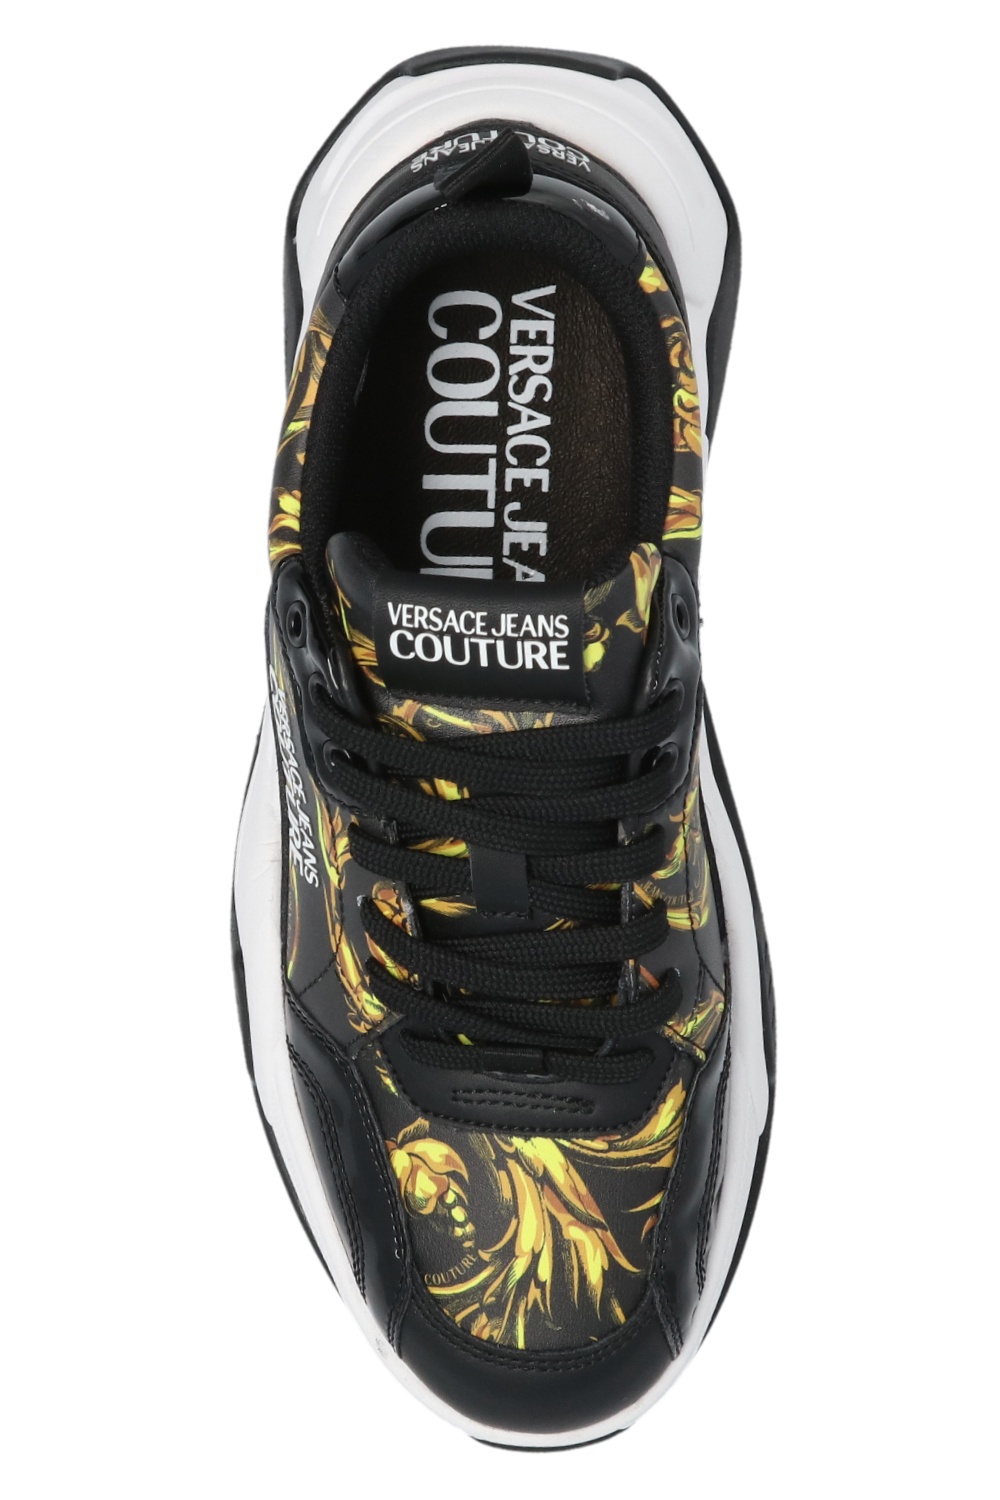 Buttero 'annie' Shoes ‘Regalia Baroque’ printed sneakers